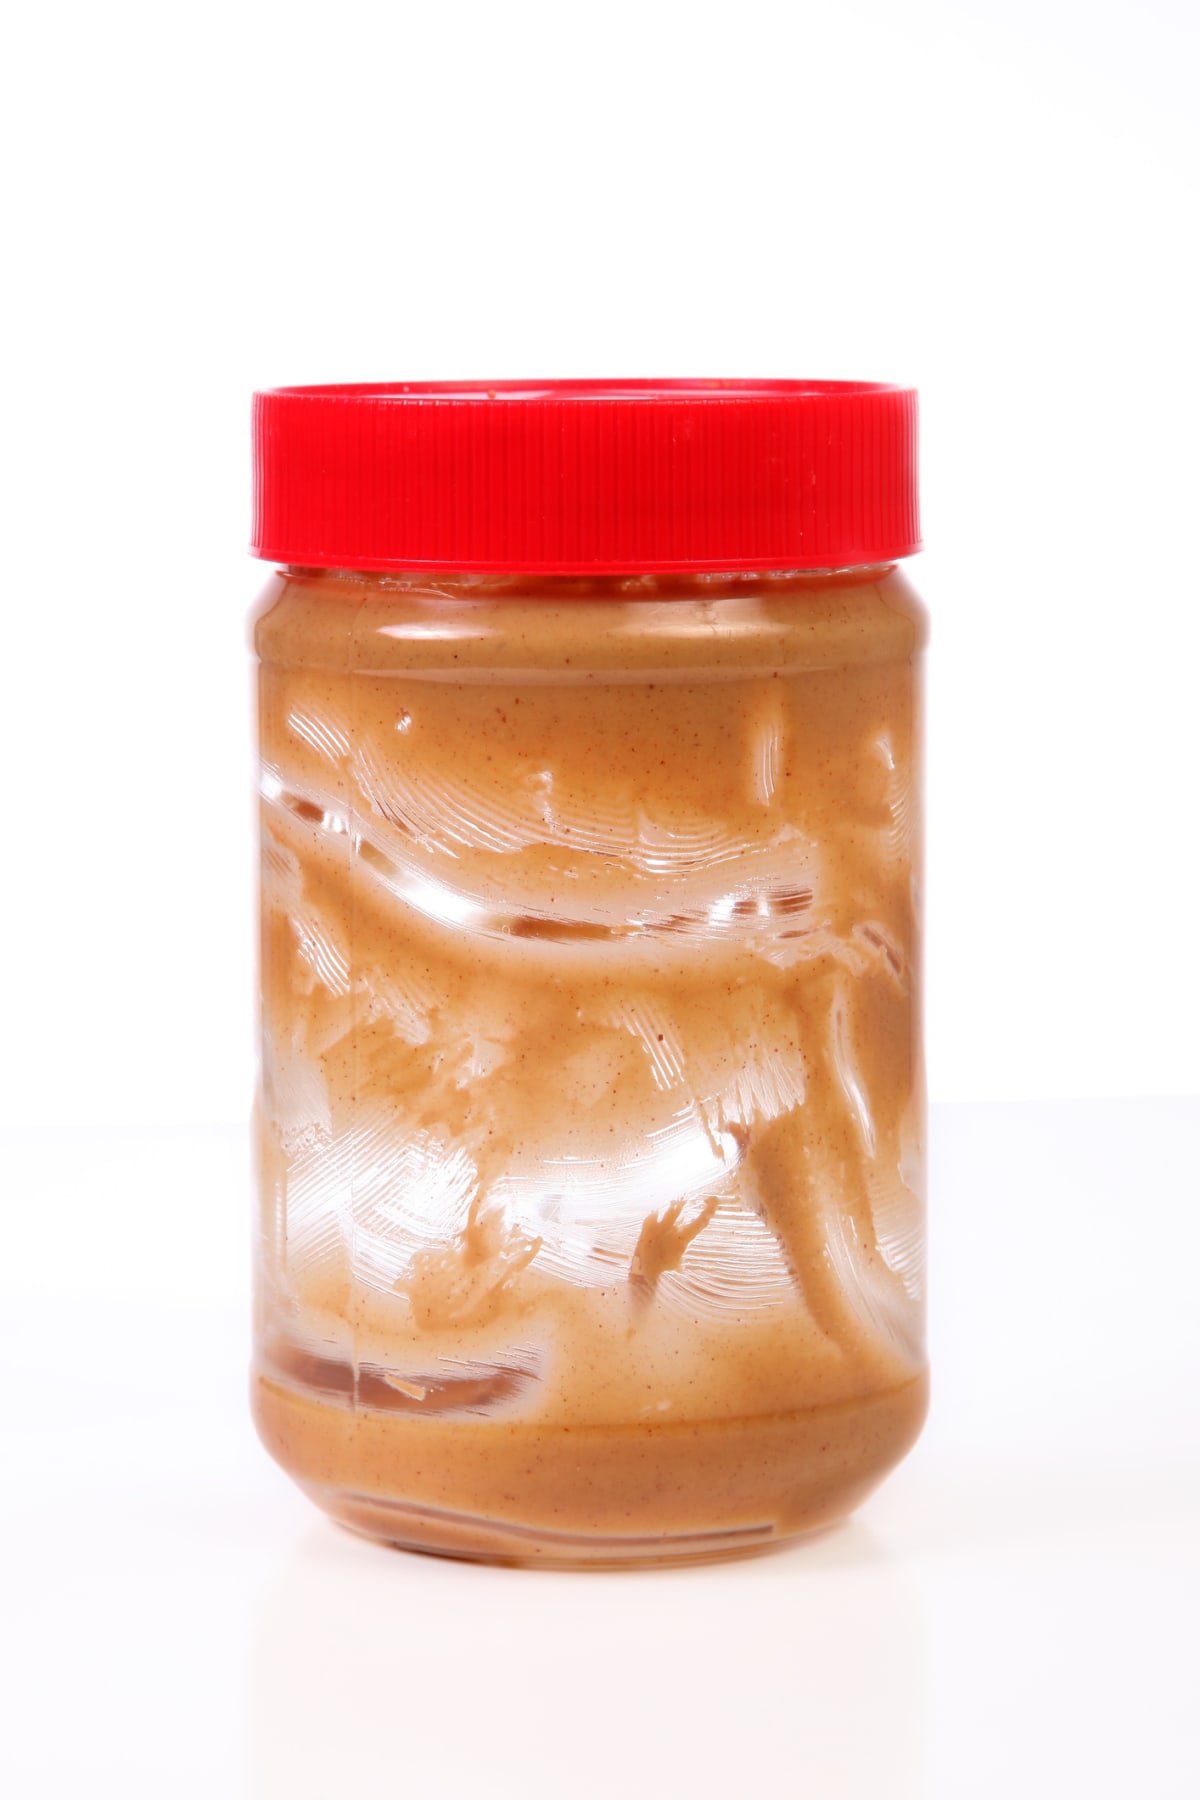 A nearly empty jar of Peanut Butter.